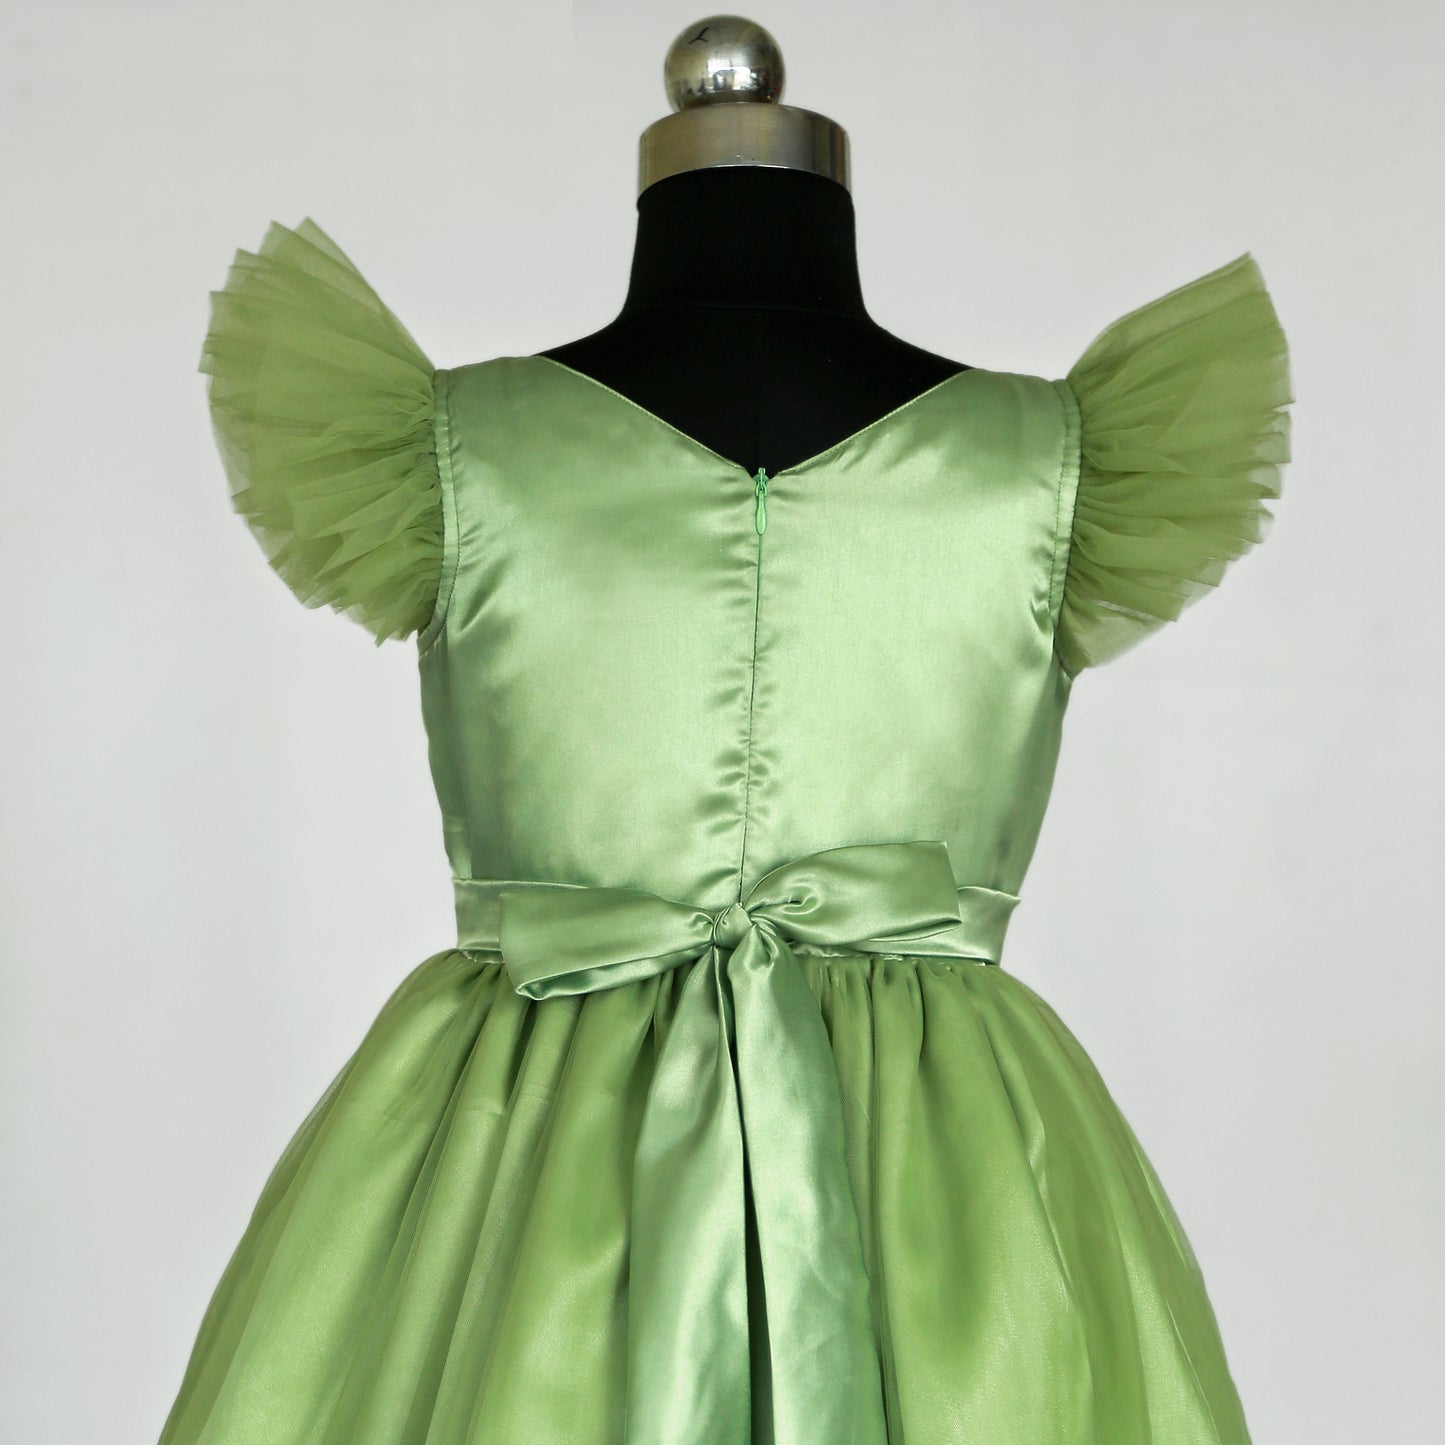 HEYKIDOO Girls Short Sleeve Embroiderer Layered Party Gown - Green - HEYKIDOO